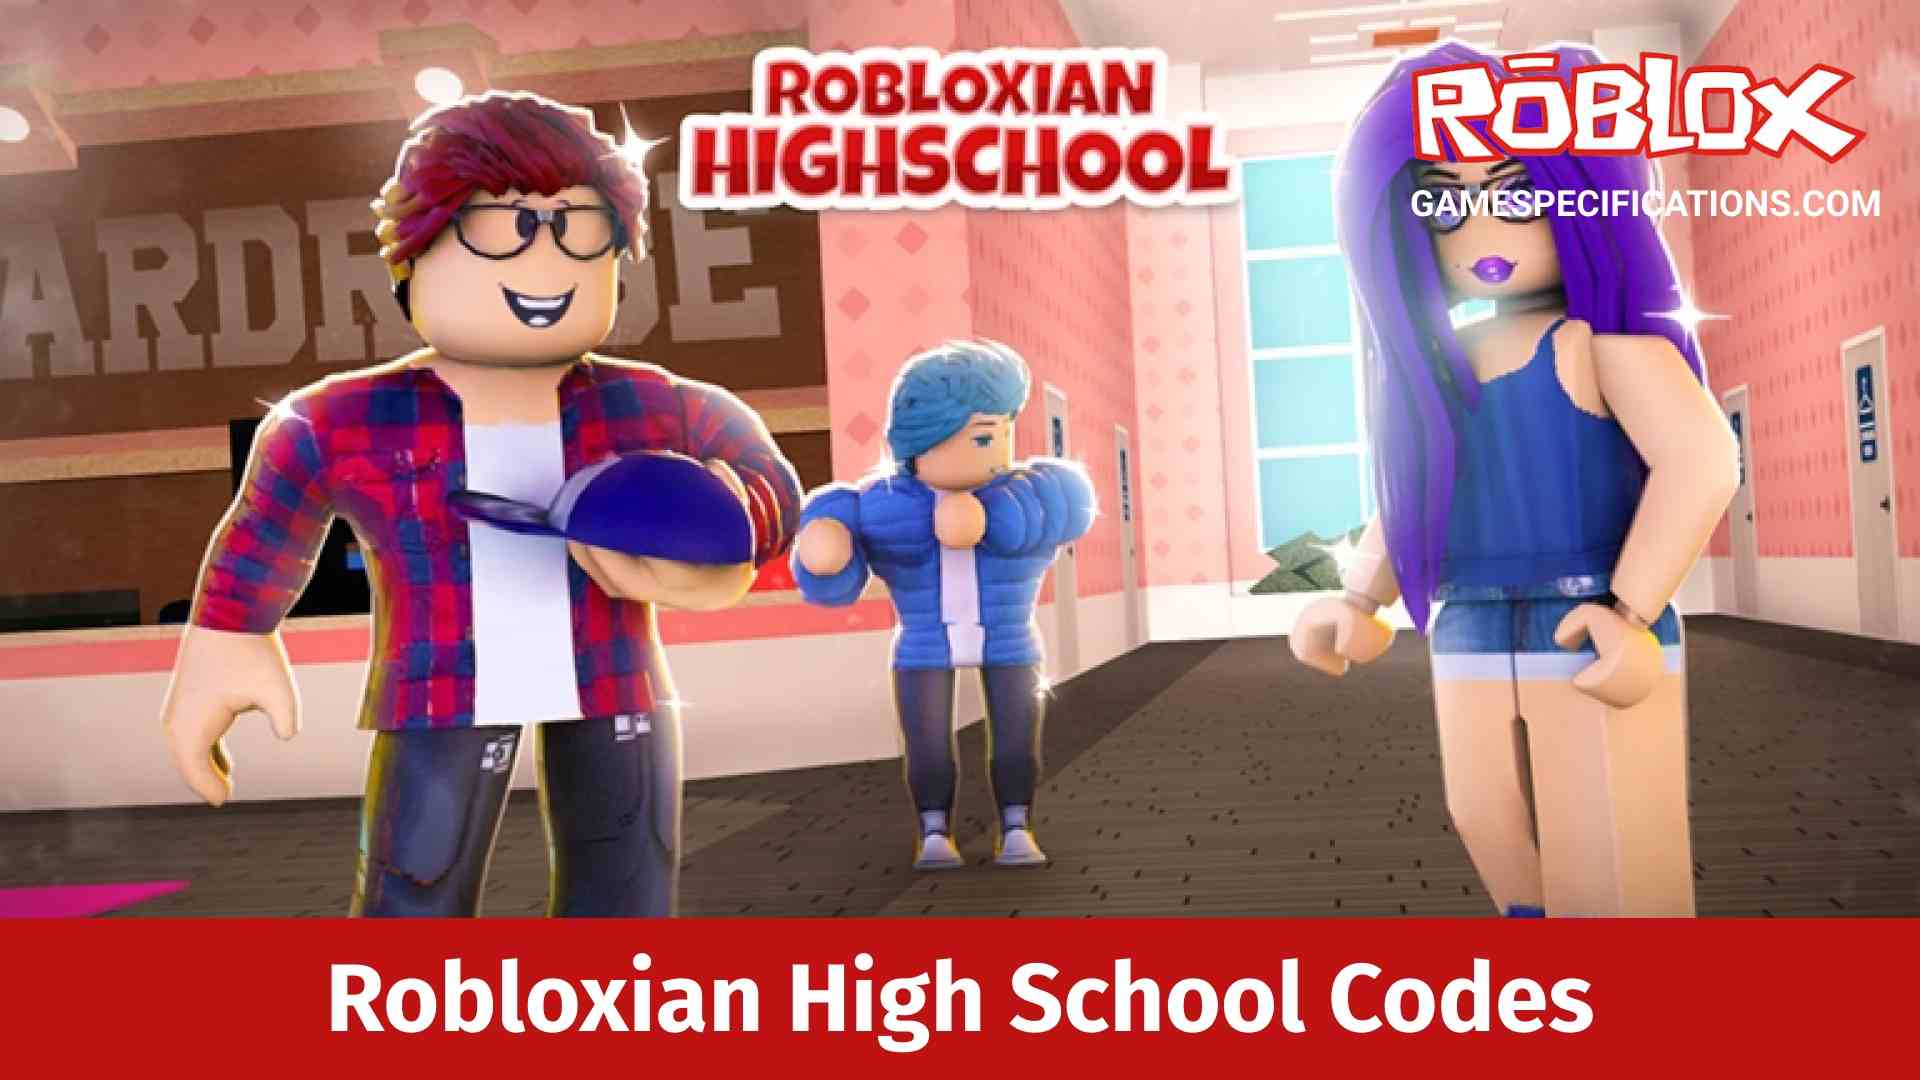 Roblox Robloxian High School Codes 2021 Game Specifications - codes for roblox high school for songs